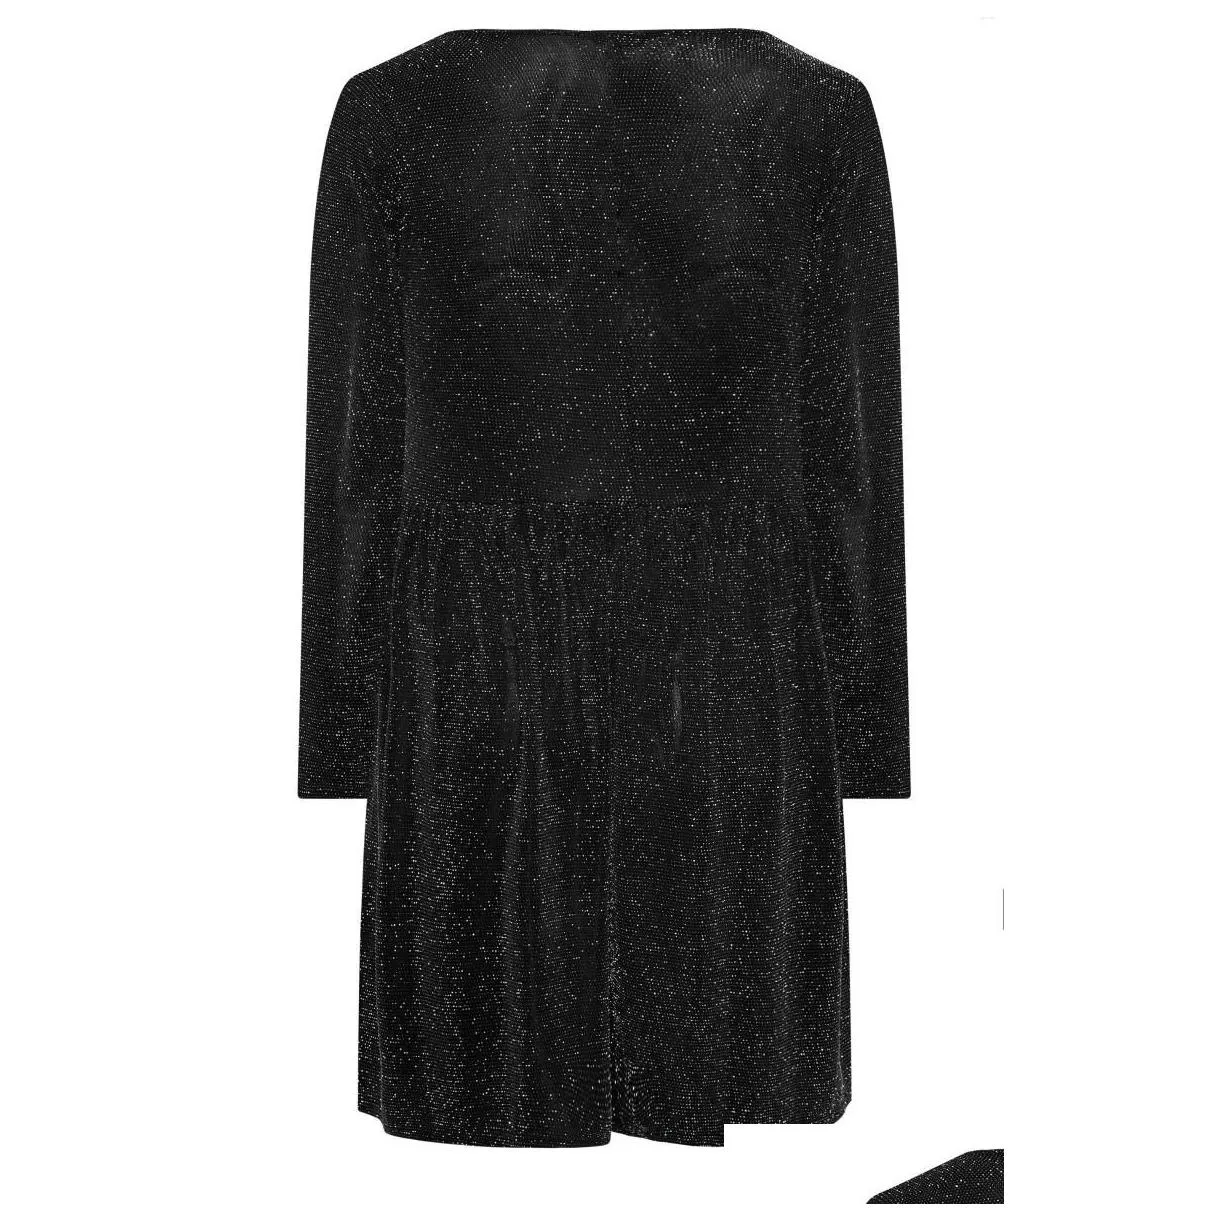 Plus Size Dresses Long Sleeve Elegant Spring Autumn Party Dress Women Black Sliver Glitter Evening Large Midi 7XL 8XL